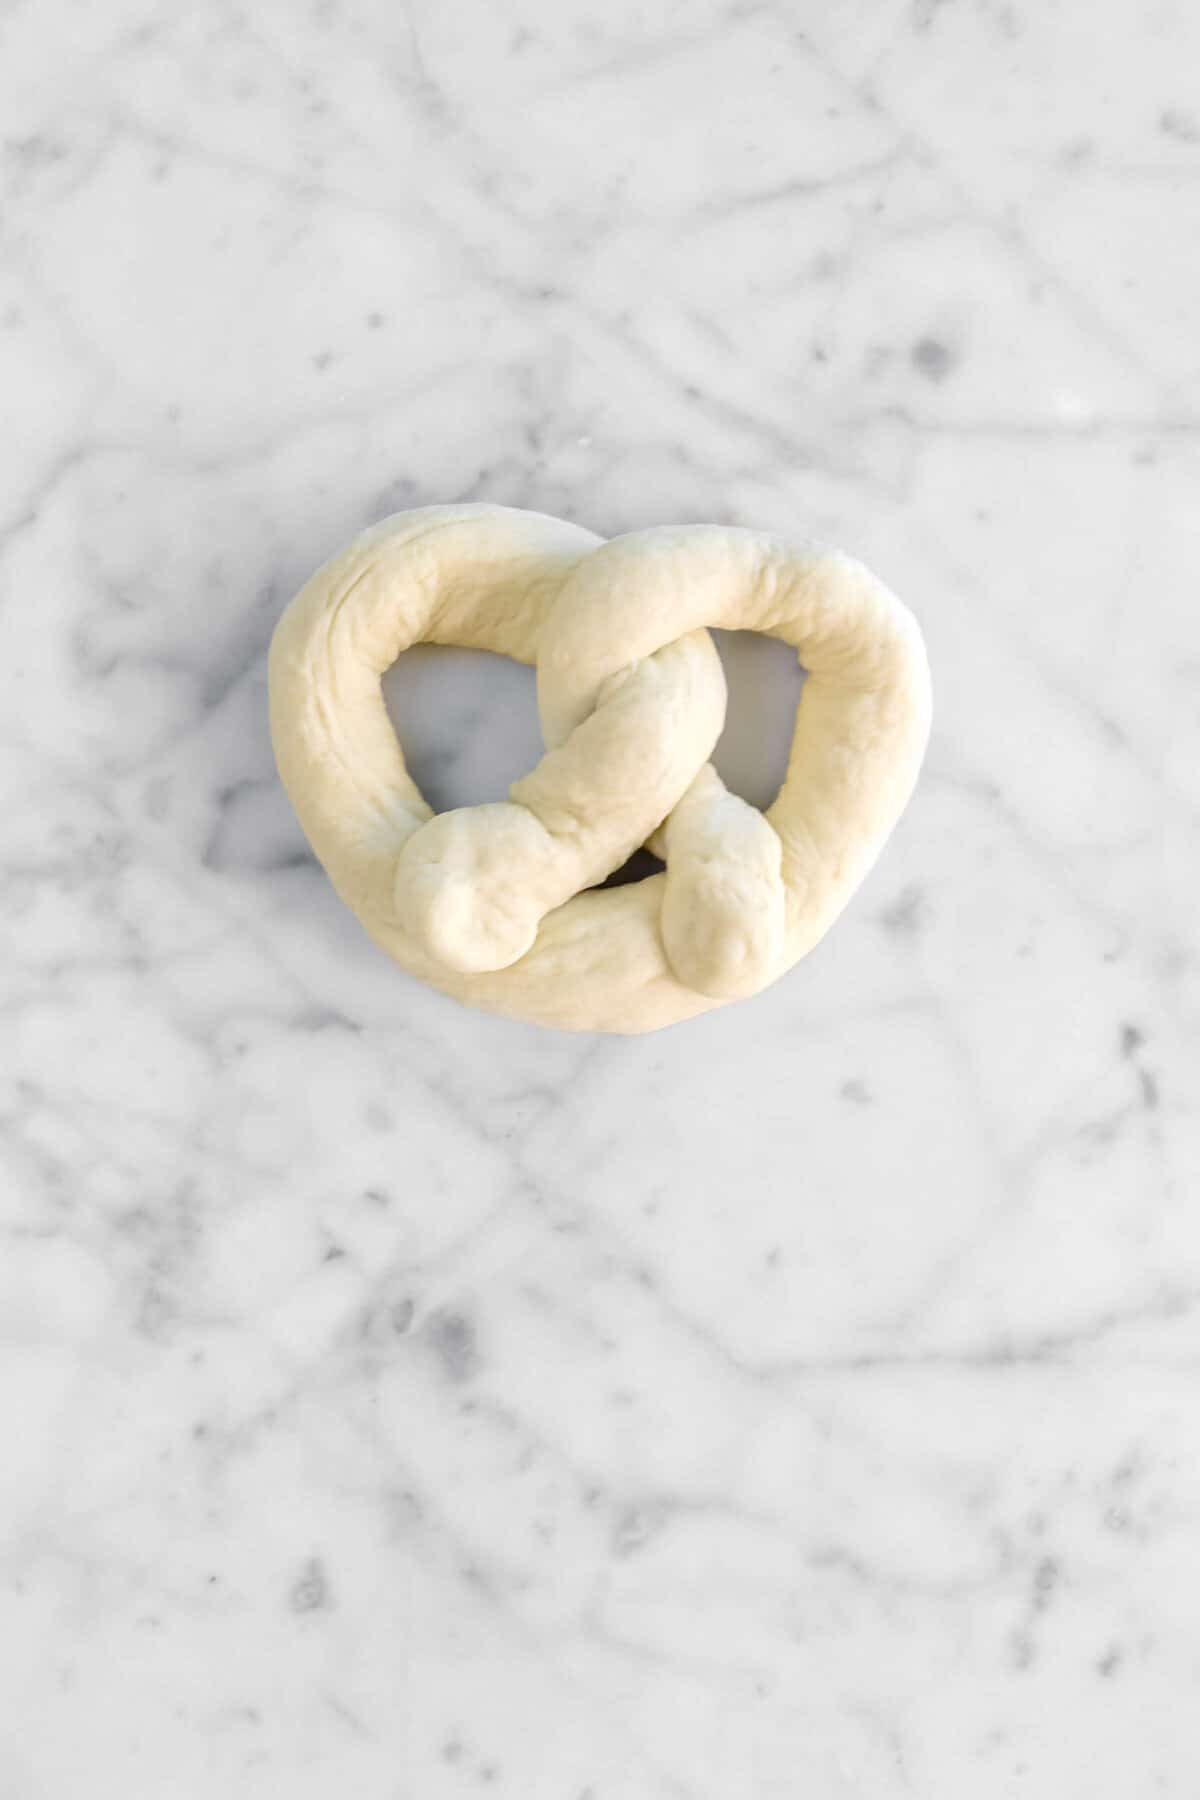 dough shaped like a pretzel on marble counter